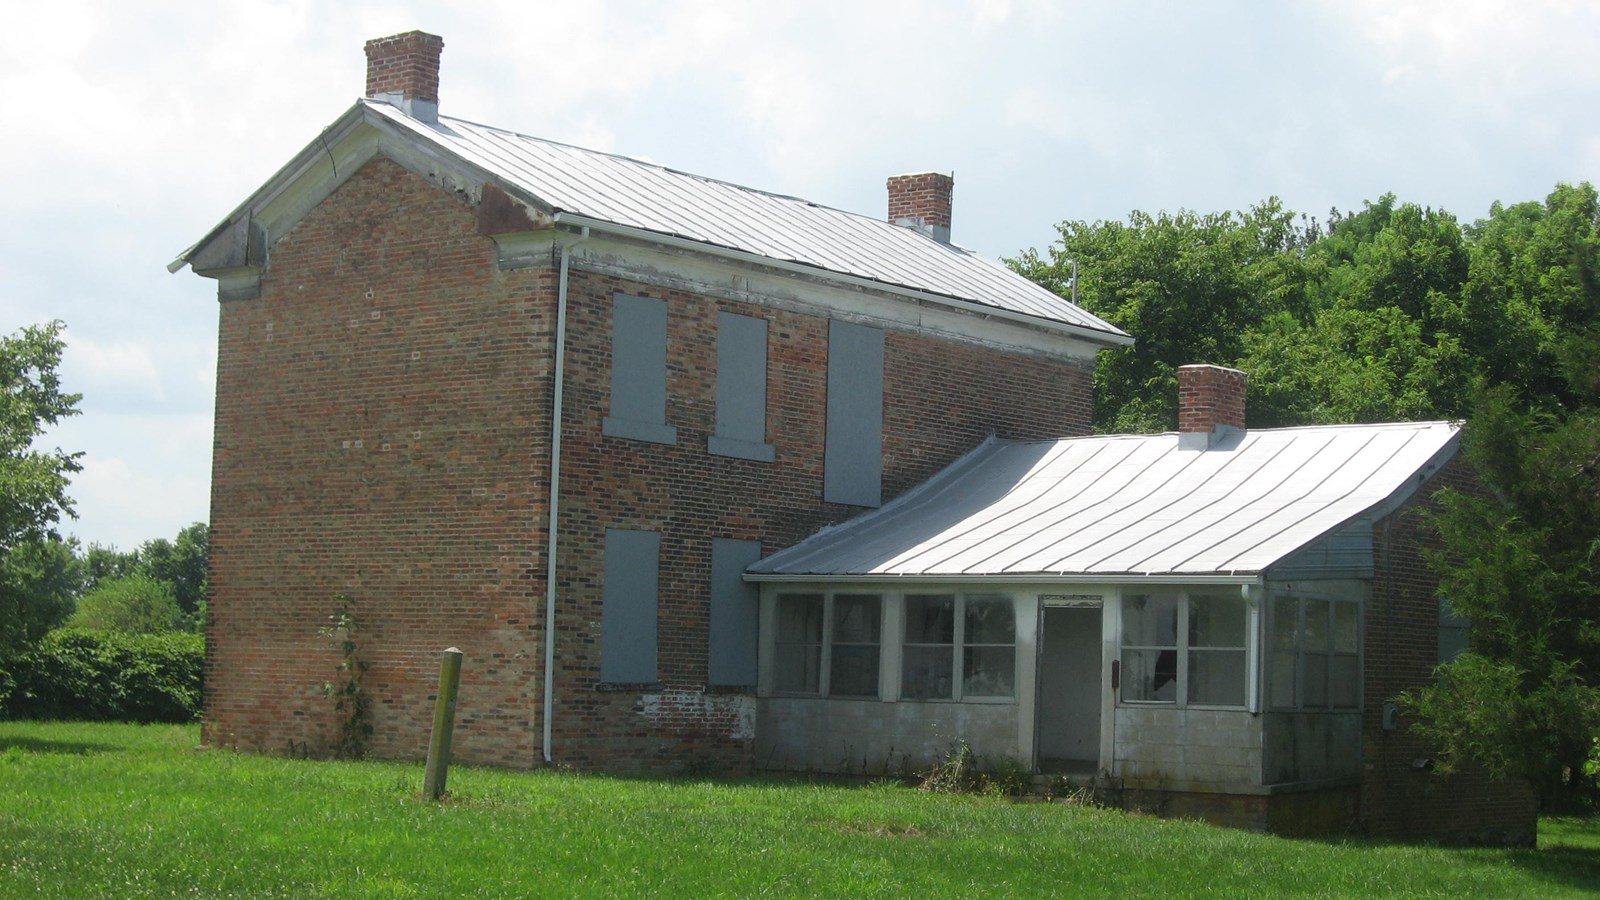 Two-story brick farmhouse. 